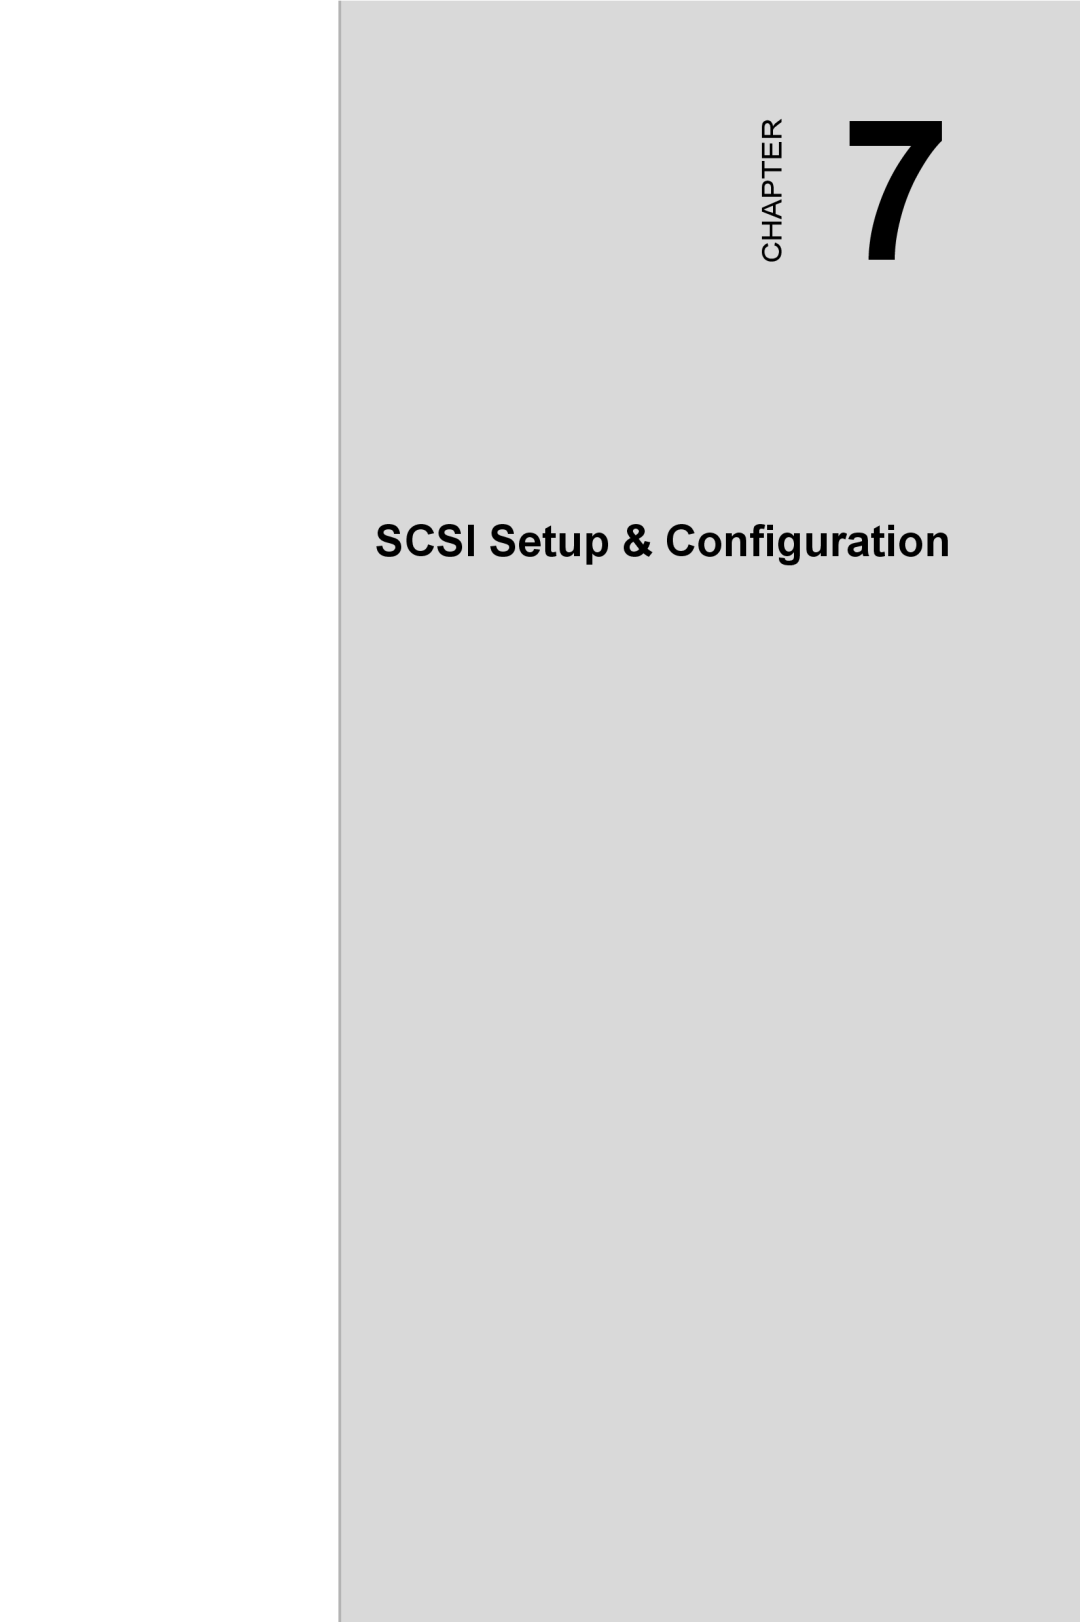 Advantech PCA-6187 user manual SCSI Setup & Configuration, Chapter 